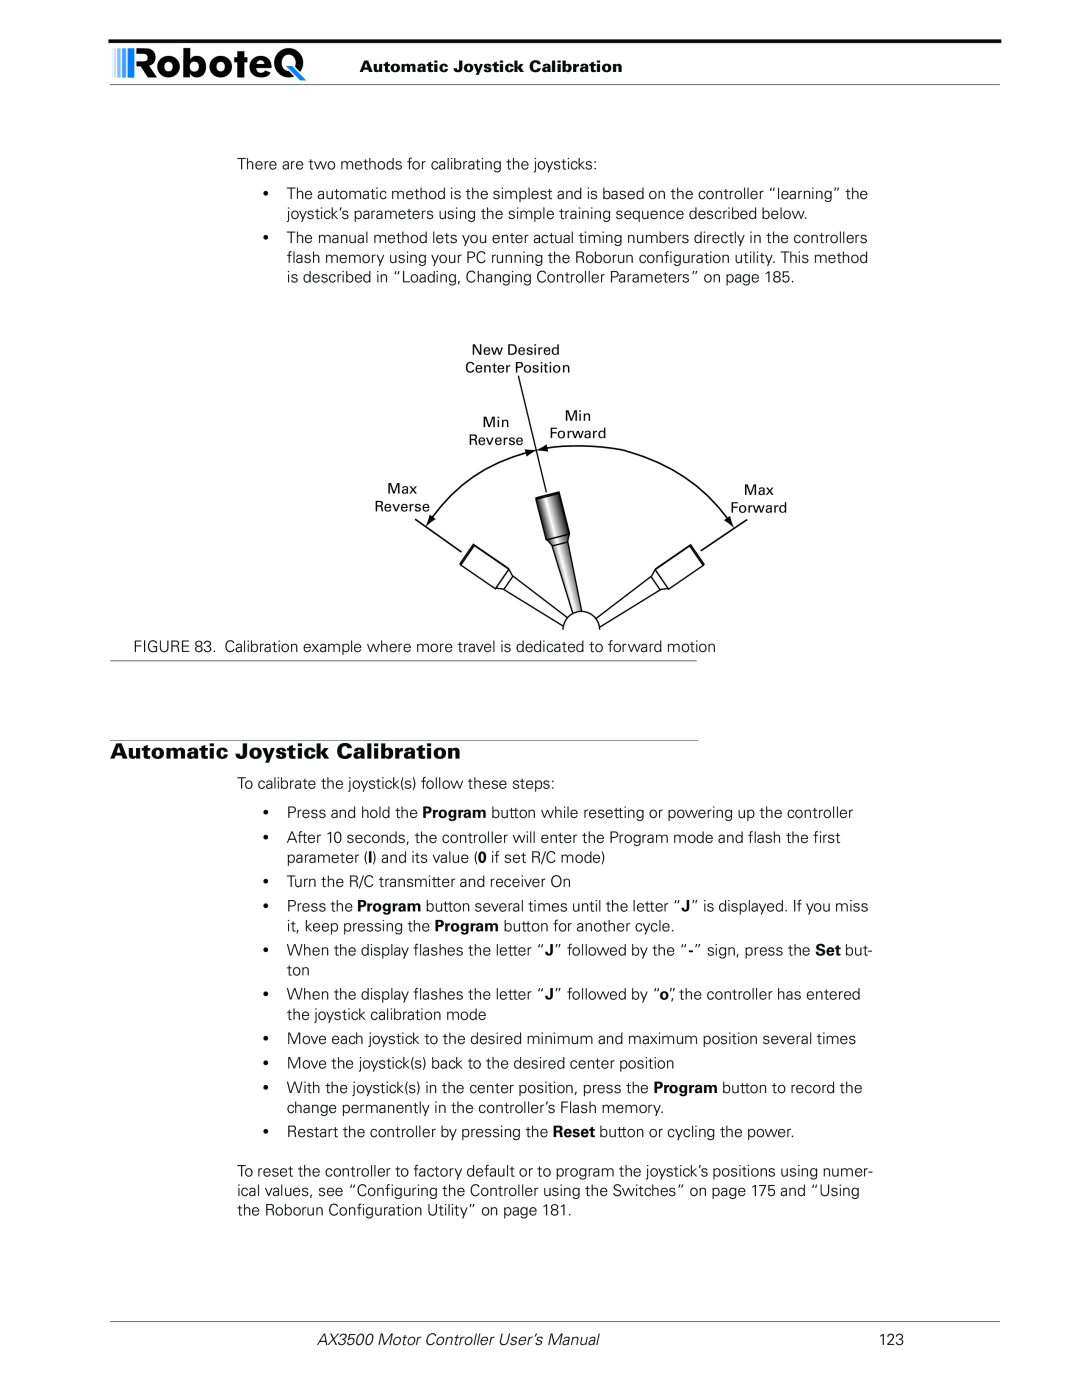 RoboteQ user manual Automatic Joystick Calibration, AX3500 Motor Controller User’s Manual 